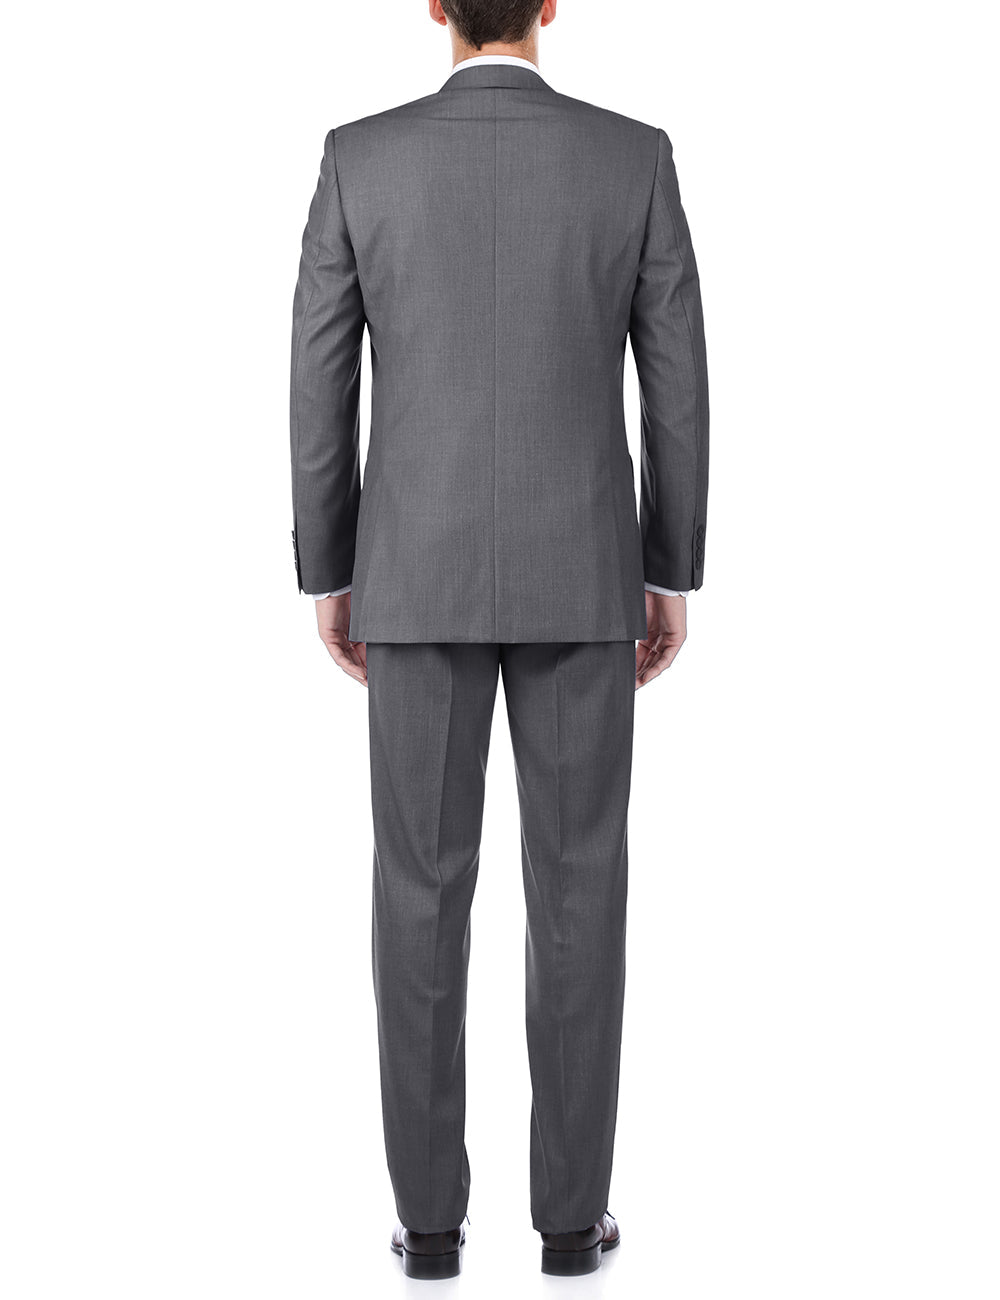 (44R) Gray 100% Virgin Wool Slim Fit Pick Stitch 2 Piece Suit 2 Button